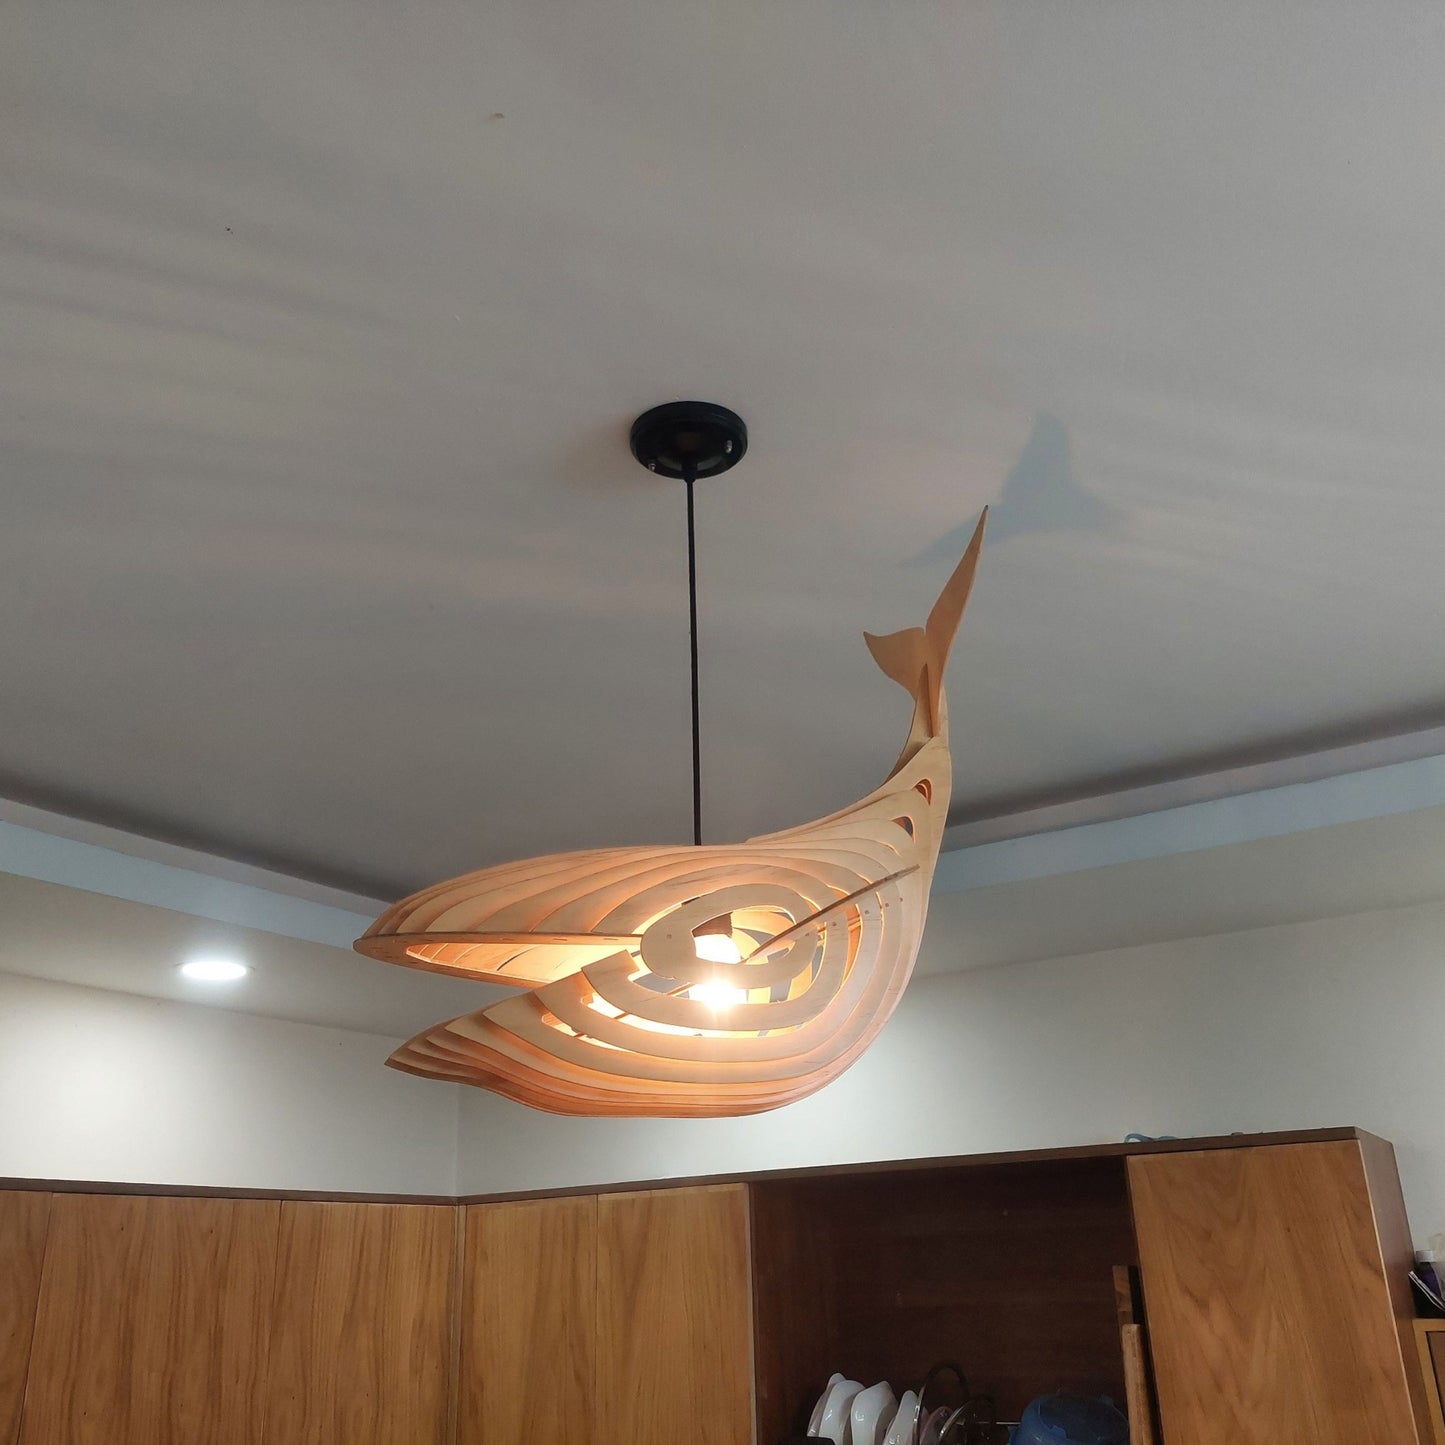 Wood Whale Pendant Light DIY Ceiling Chandelier Lamp For Home Decor